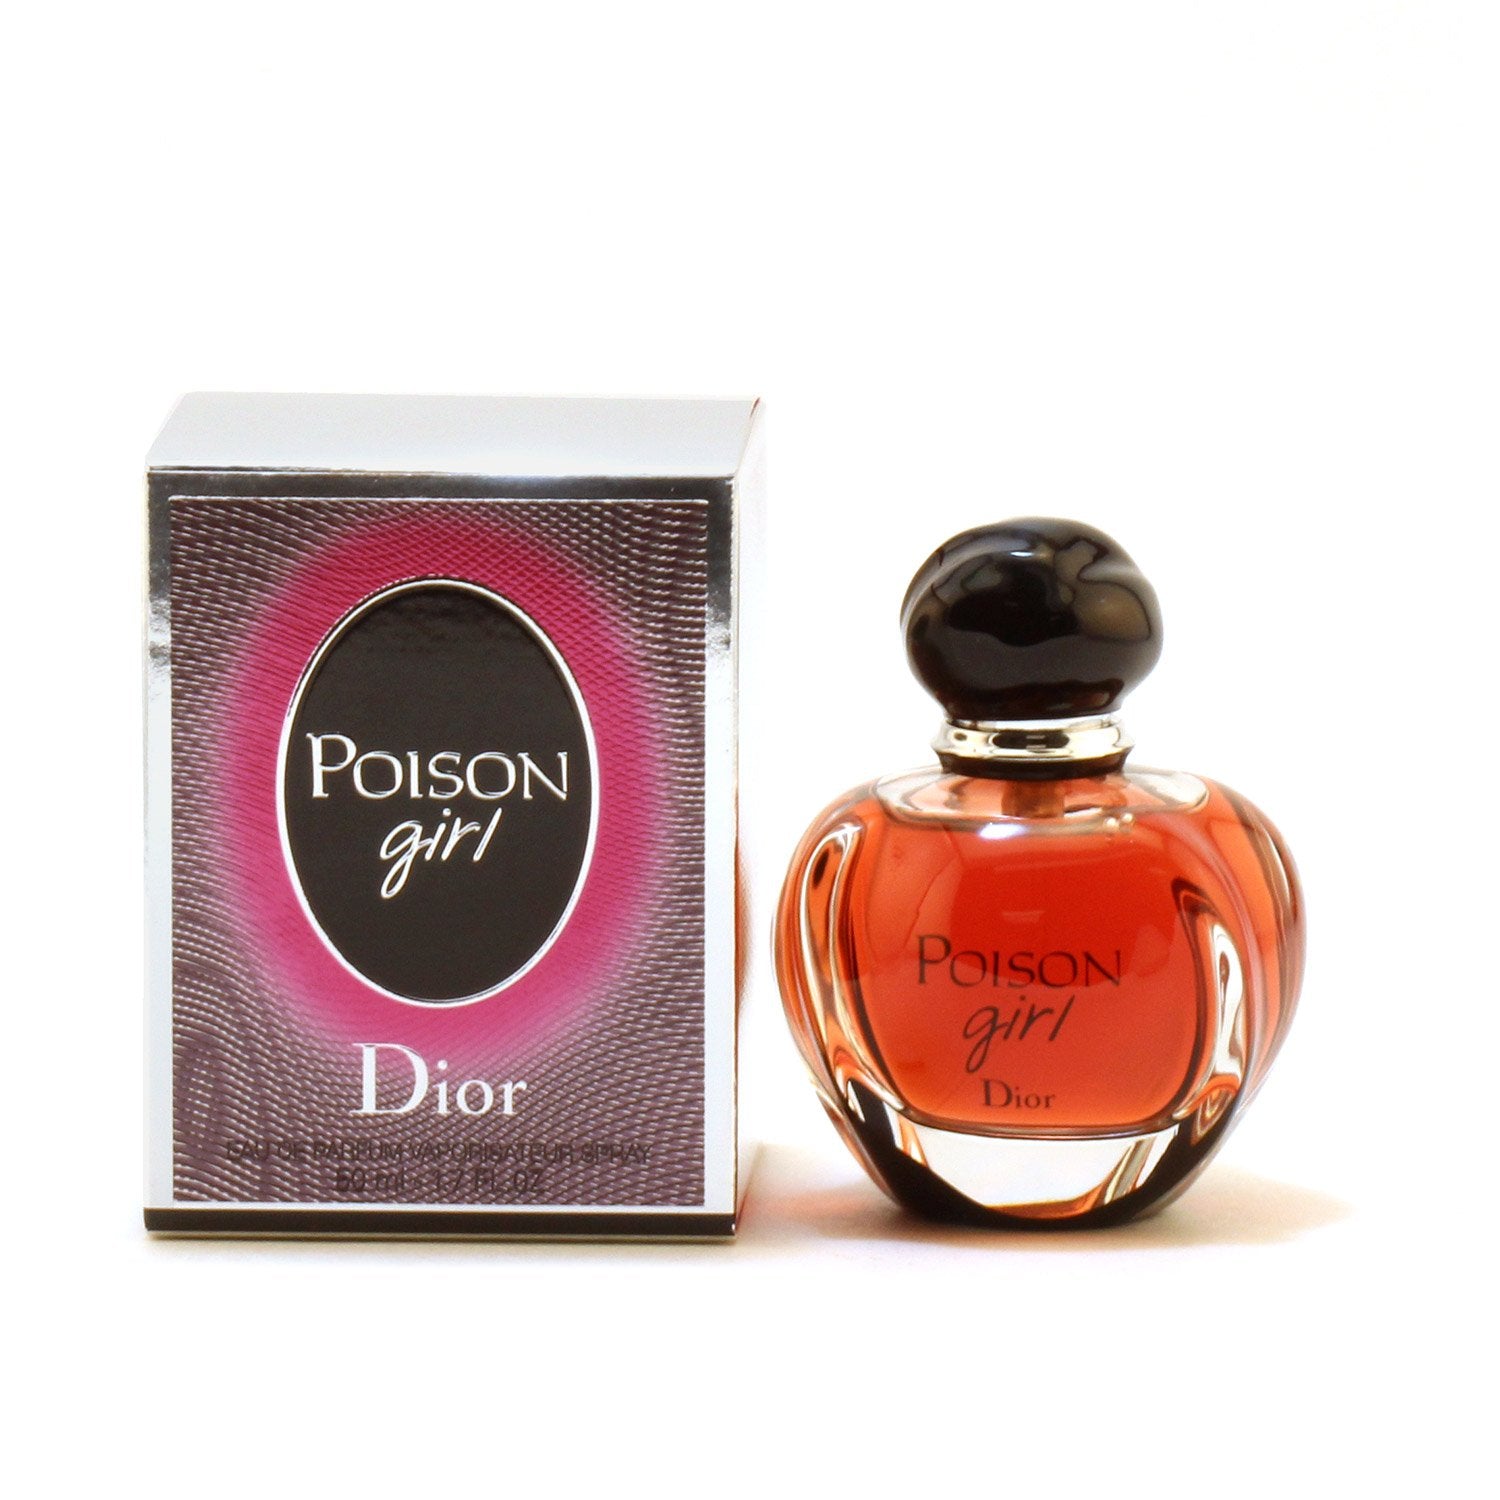 Dior Poison Girl 50ml  10ml Gift Set  eBay